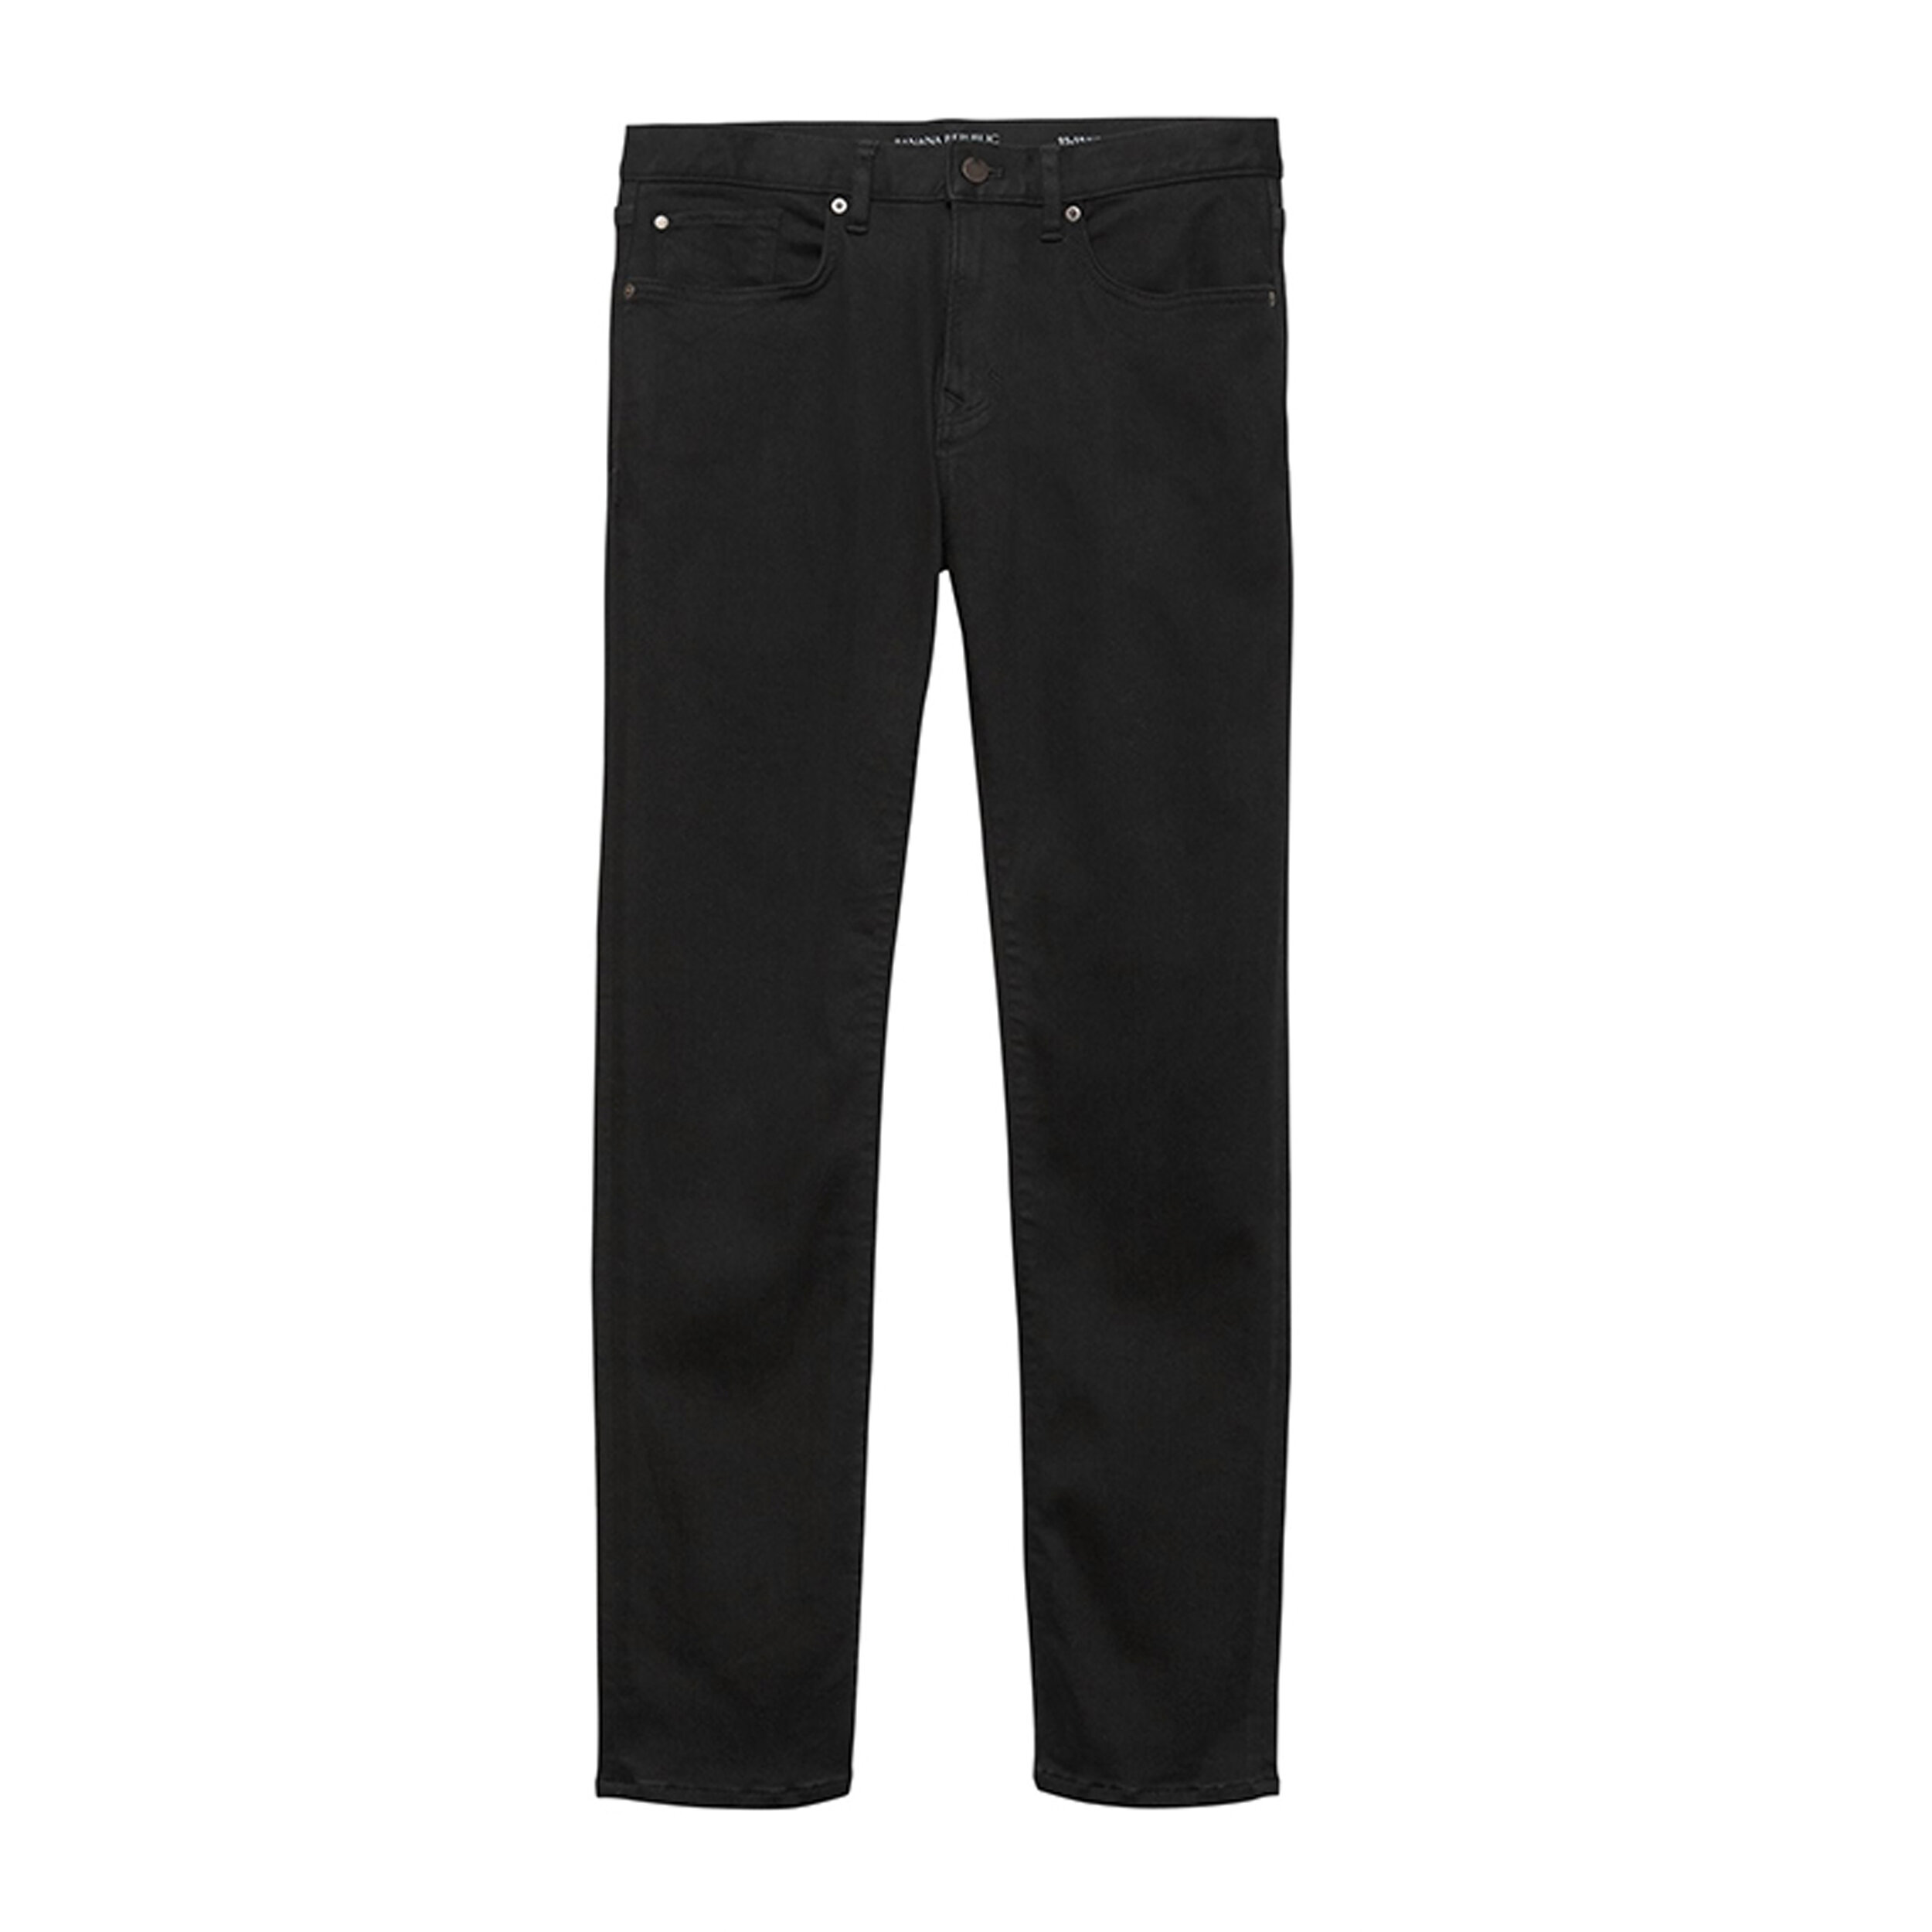  Slim Luxe Traveler Black Jeans, Banana Republic P5,950 